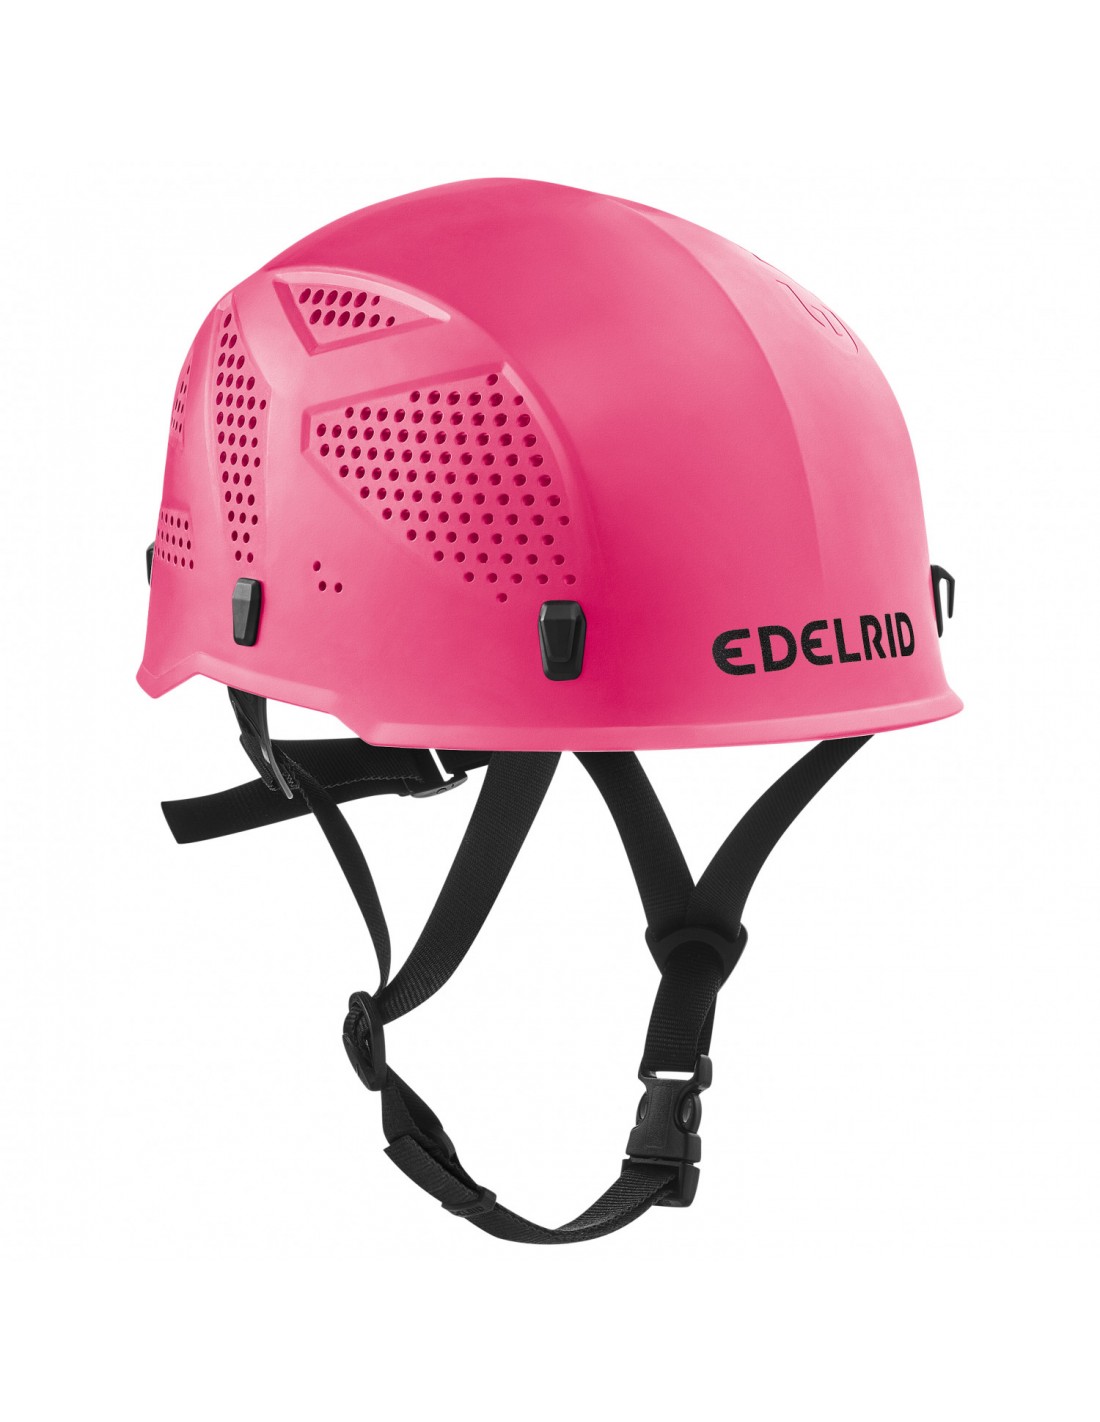 Edelrid Kletterhelm Ultralight, granita Kletterhelmfarbe - Pink, Kletterhelmgröße (Kopfumfang) - ~ 54 - 62 cm, von Edelrid